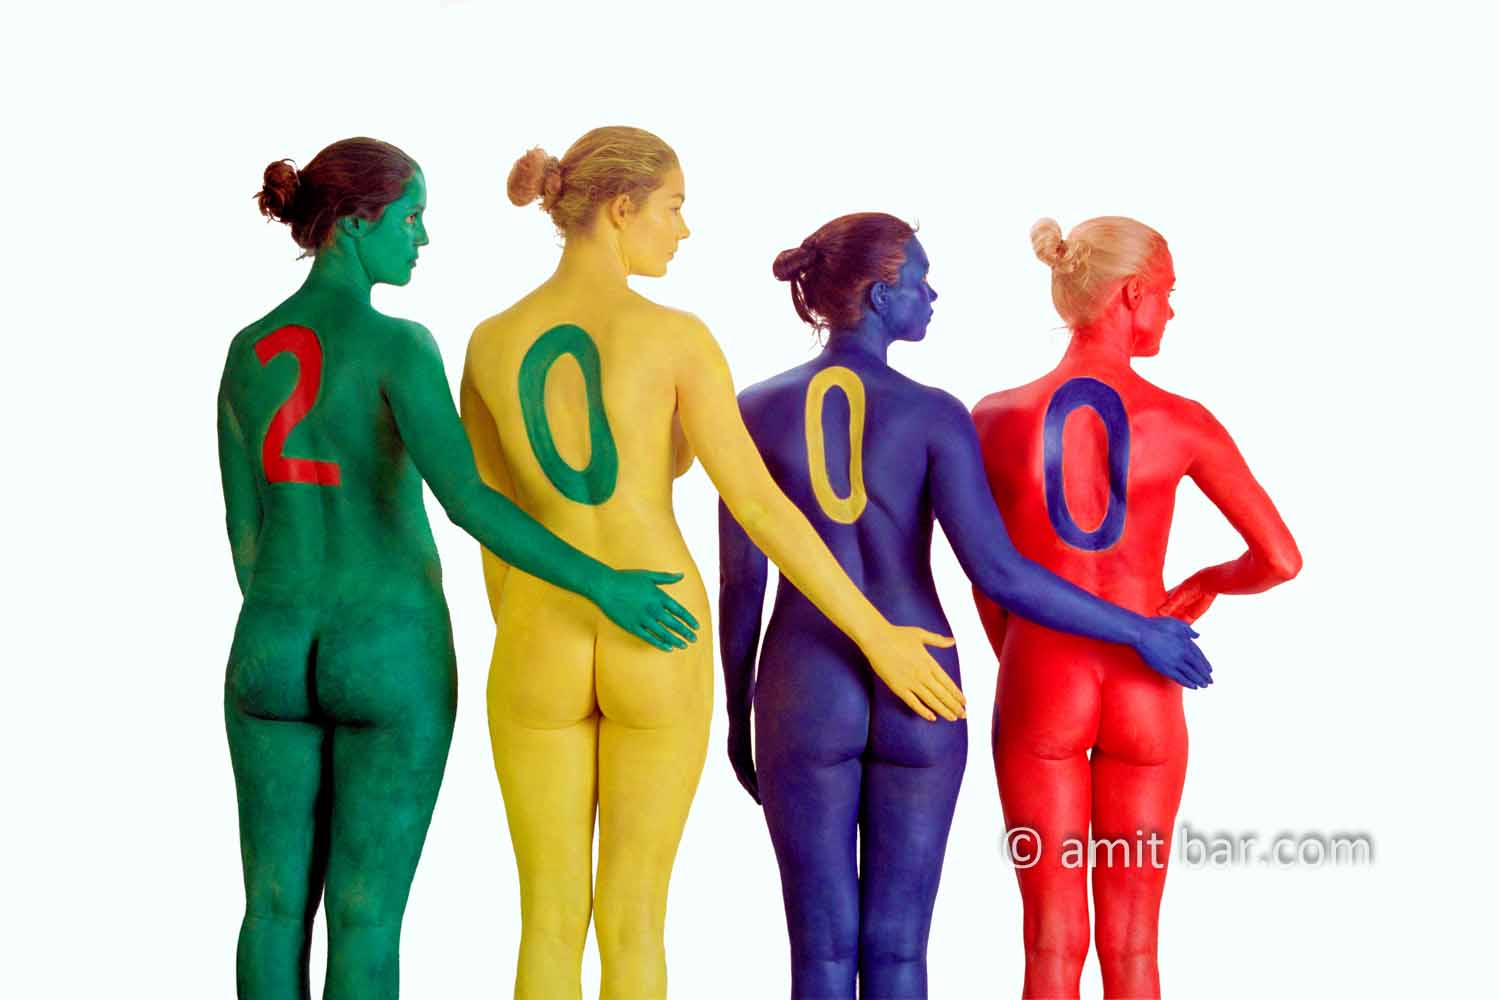 Millenium girls I: Four body painted girls are celebrating the mlilenium